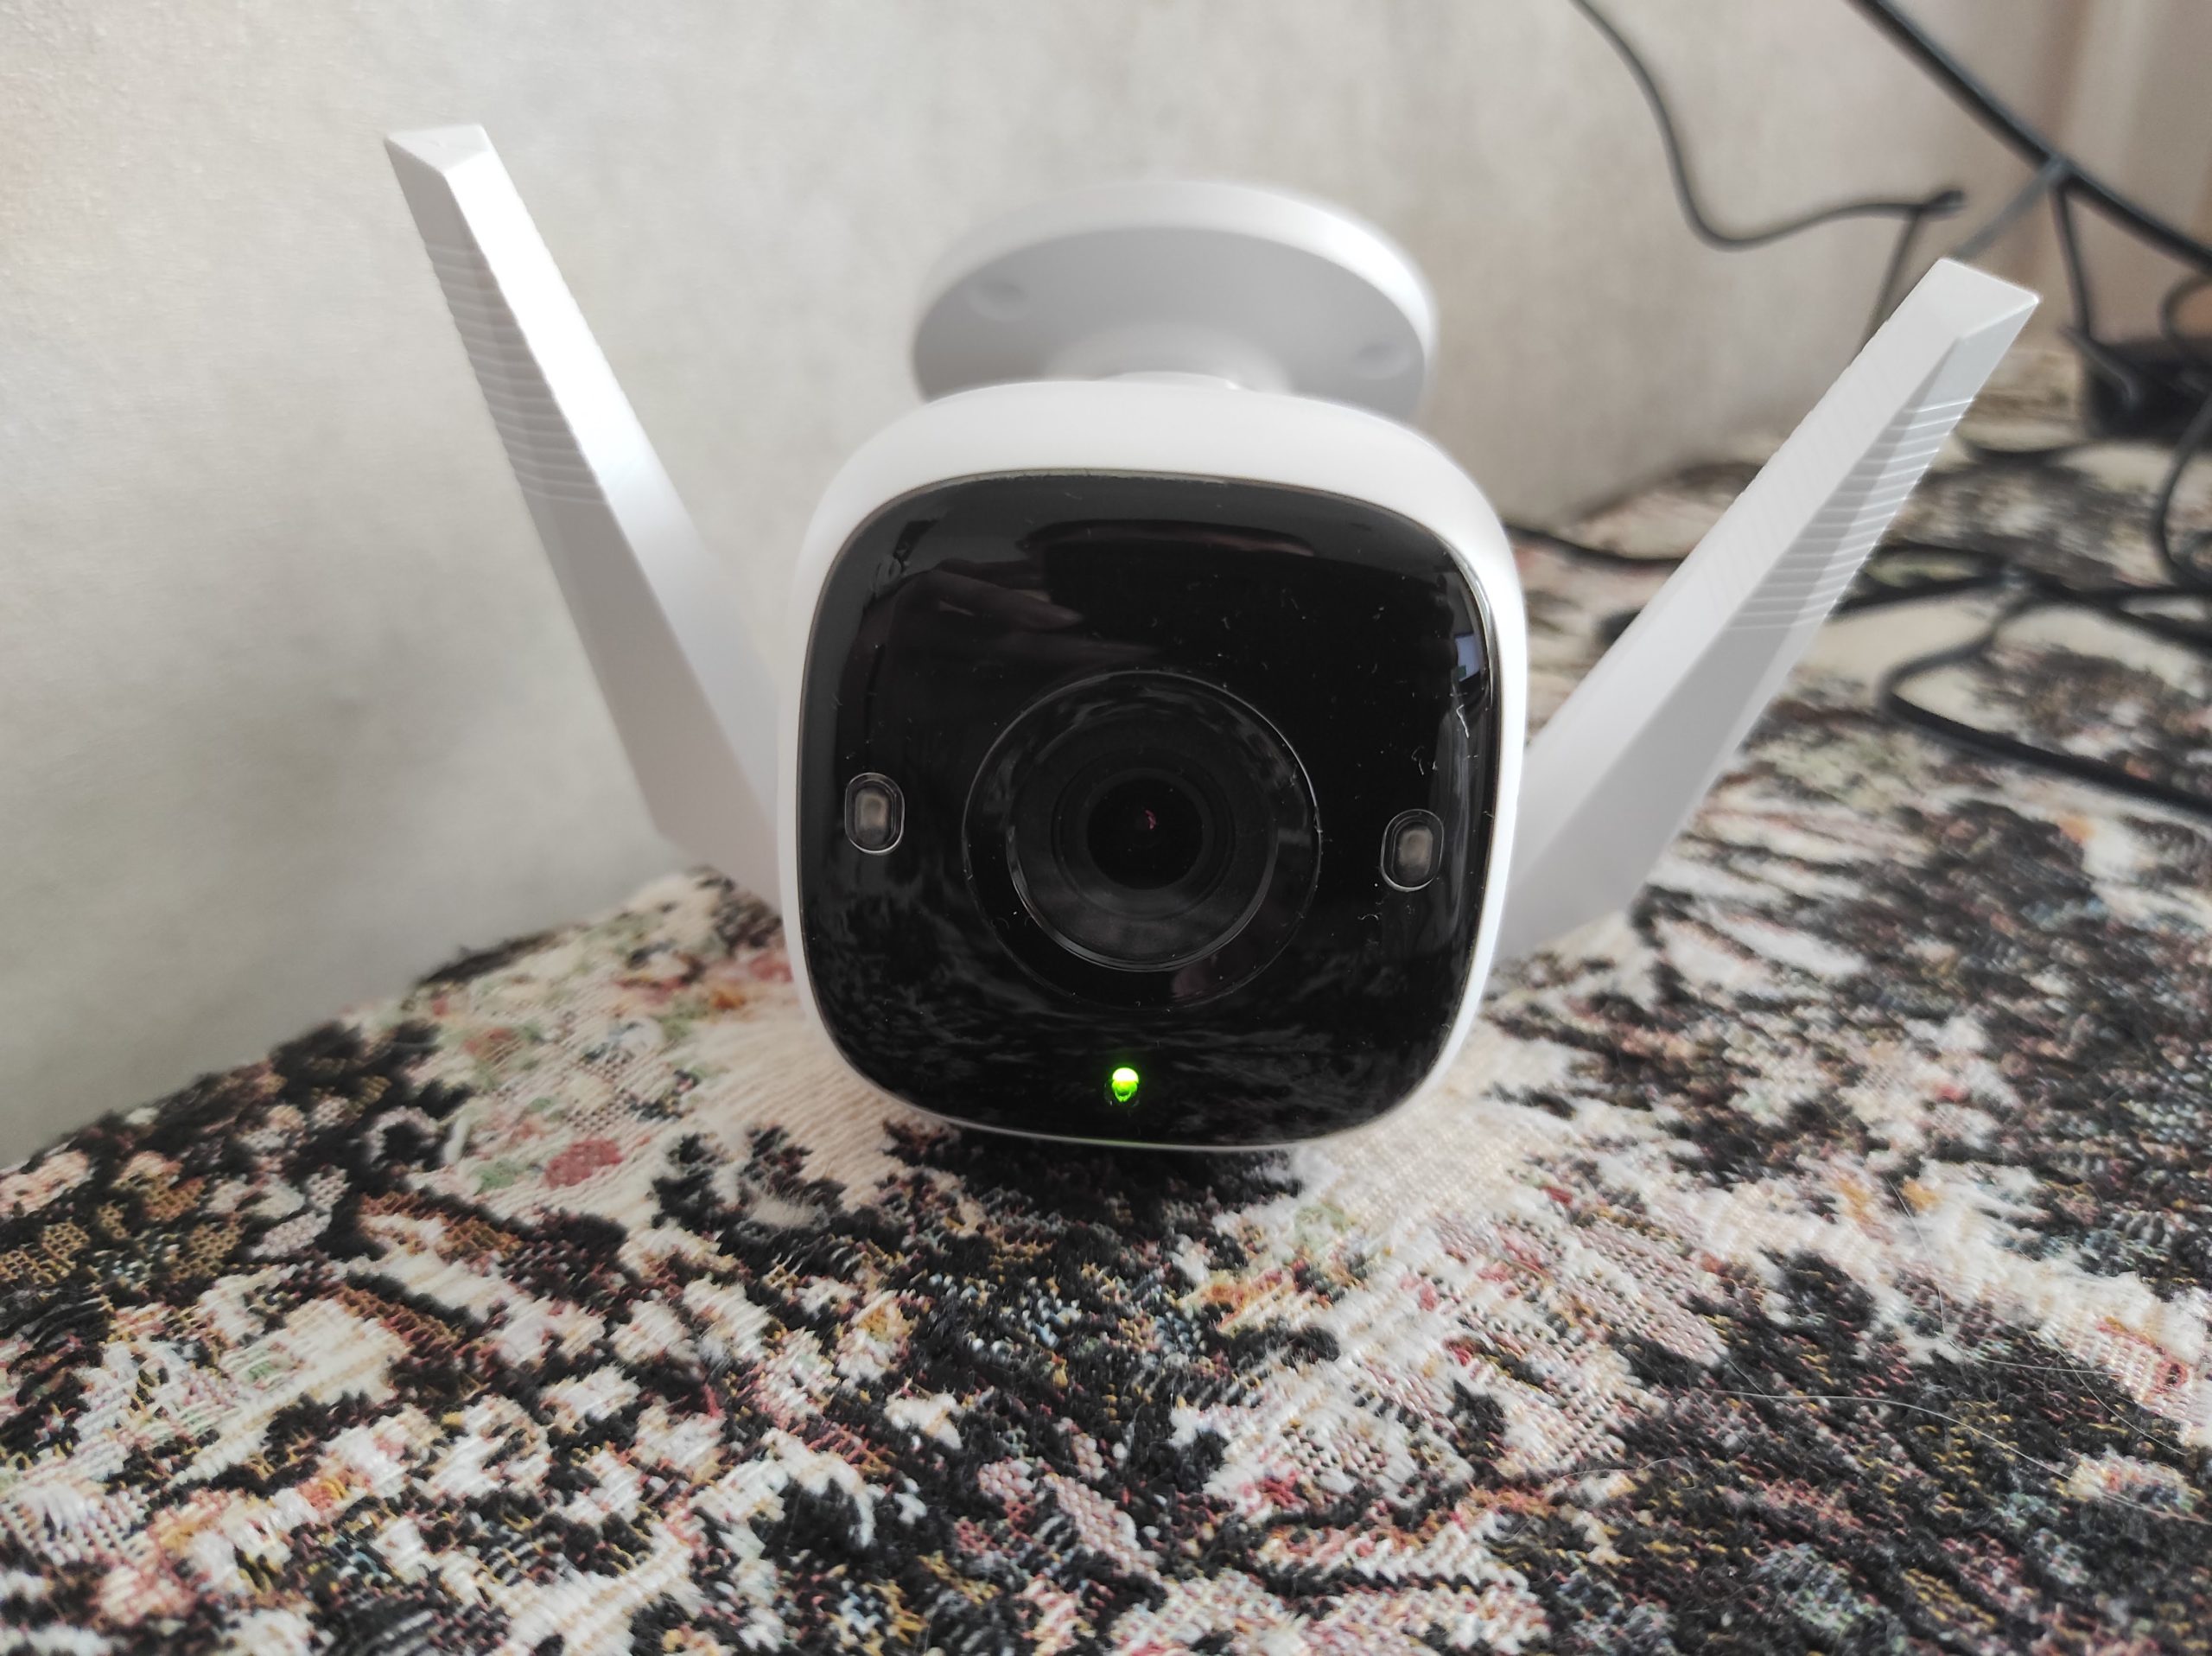 TP-Link TAPO C310: обзор уличной Wi-Fi камеры